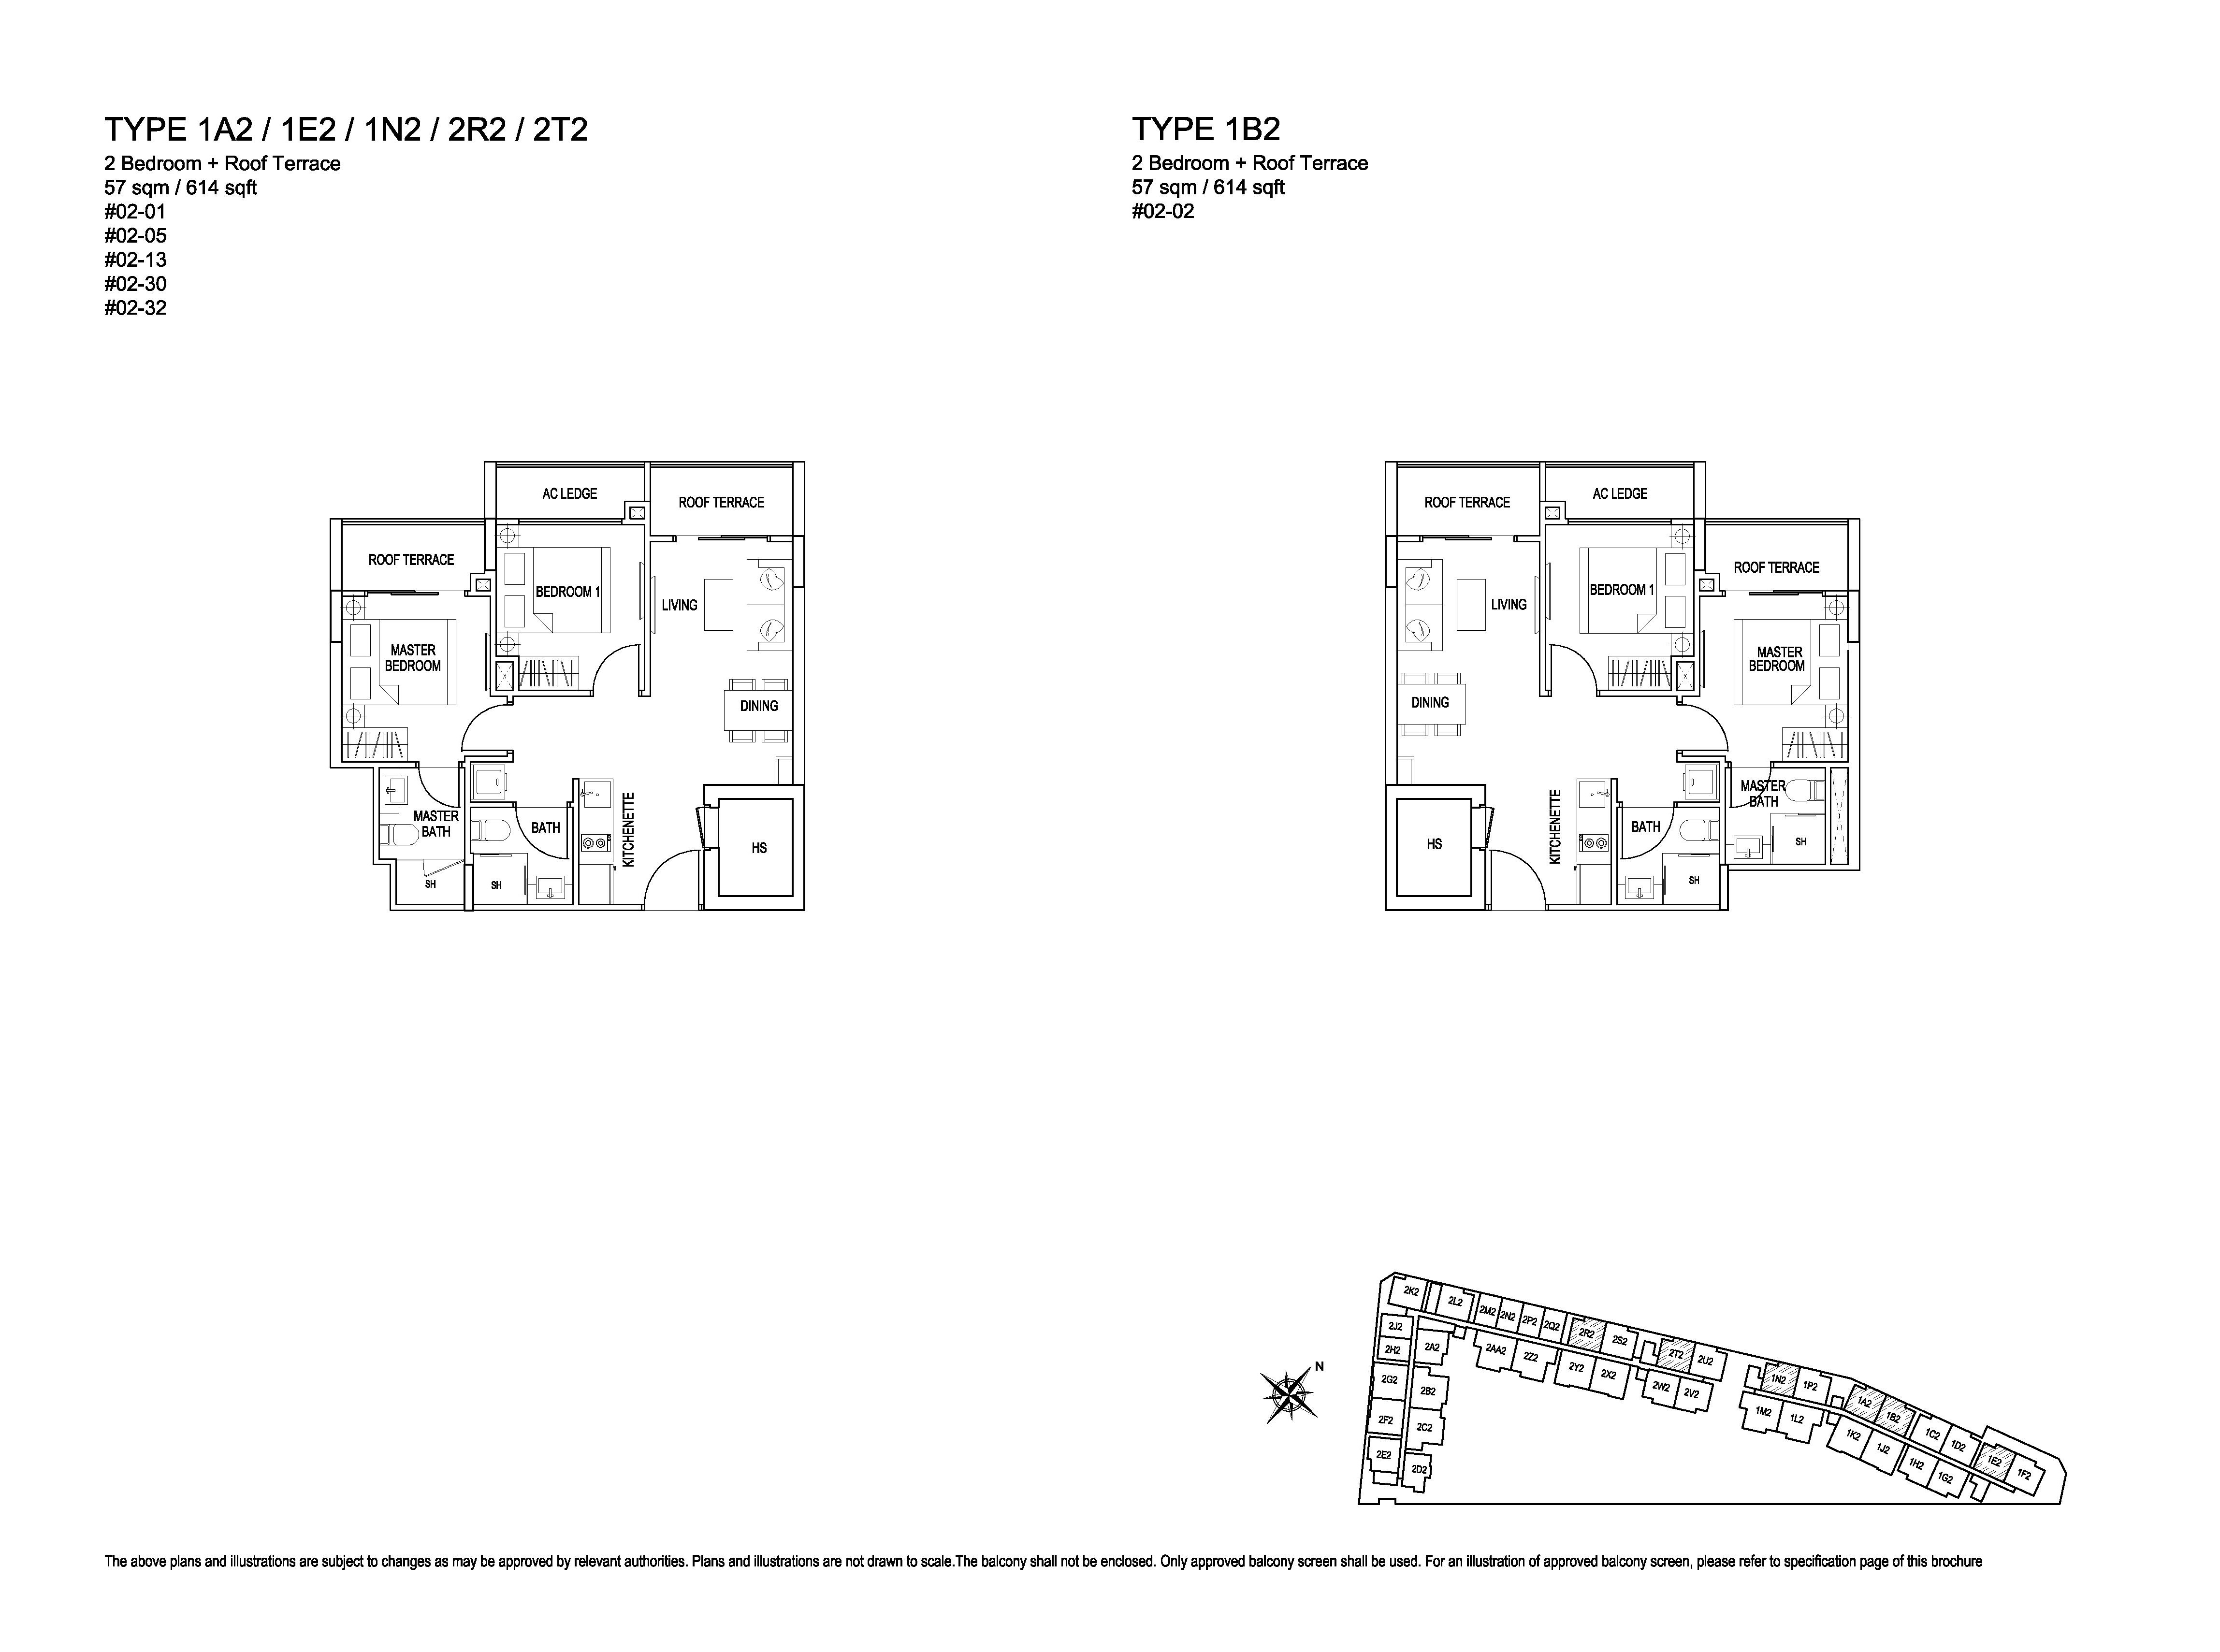 Kensington Square 2 Bedroom Floor Plans Type 1A2, 1E2, 1N2, 2R2, 2T2, 1B2